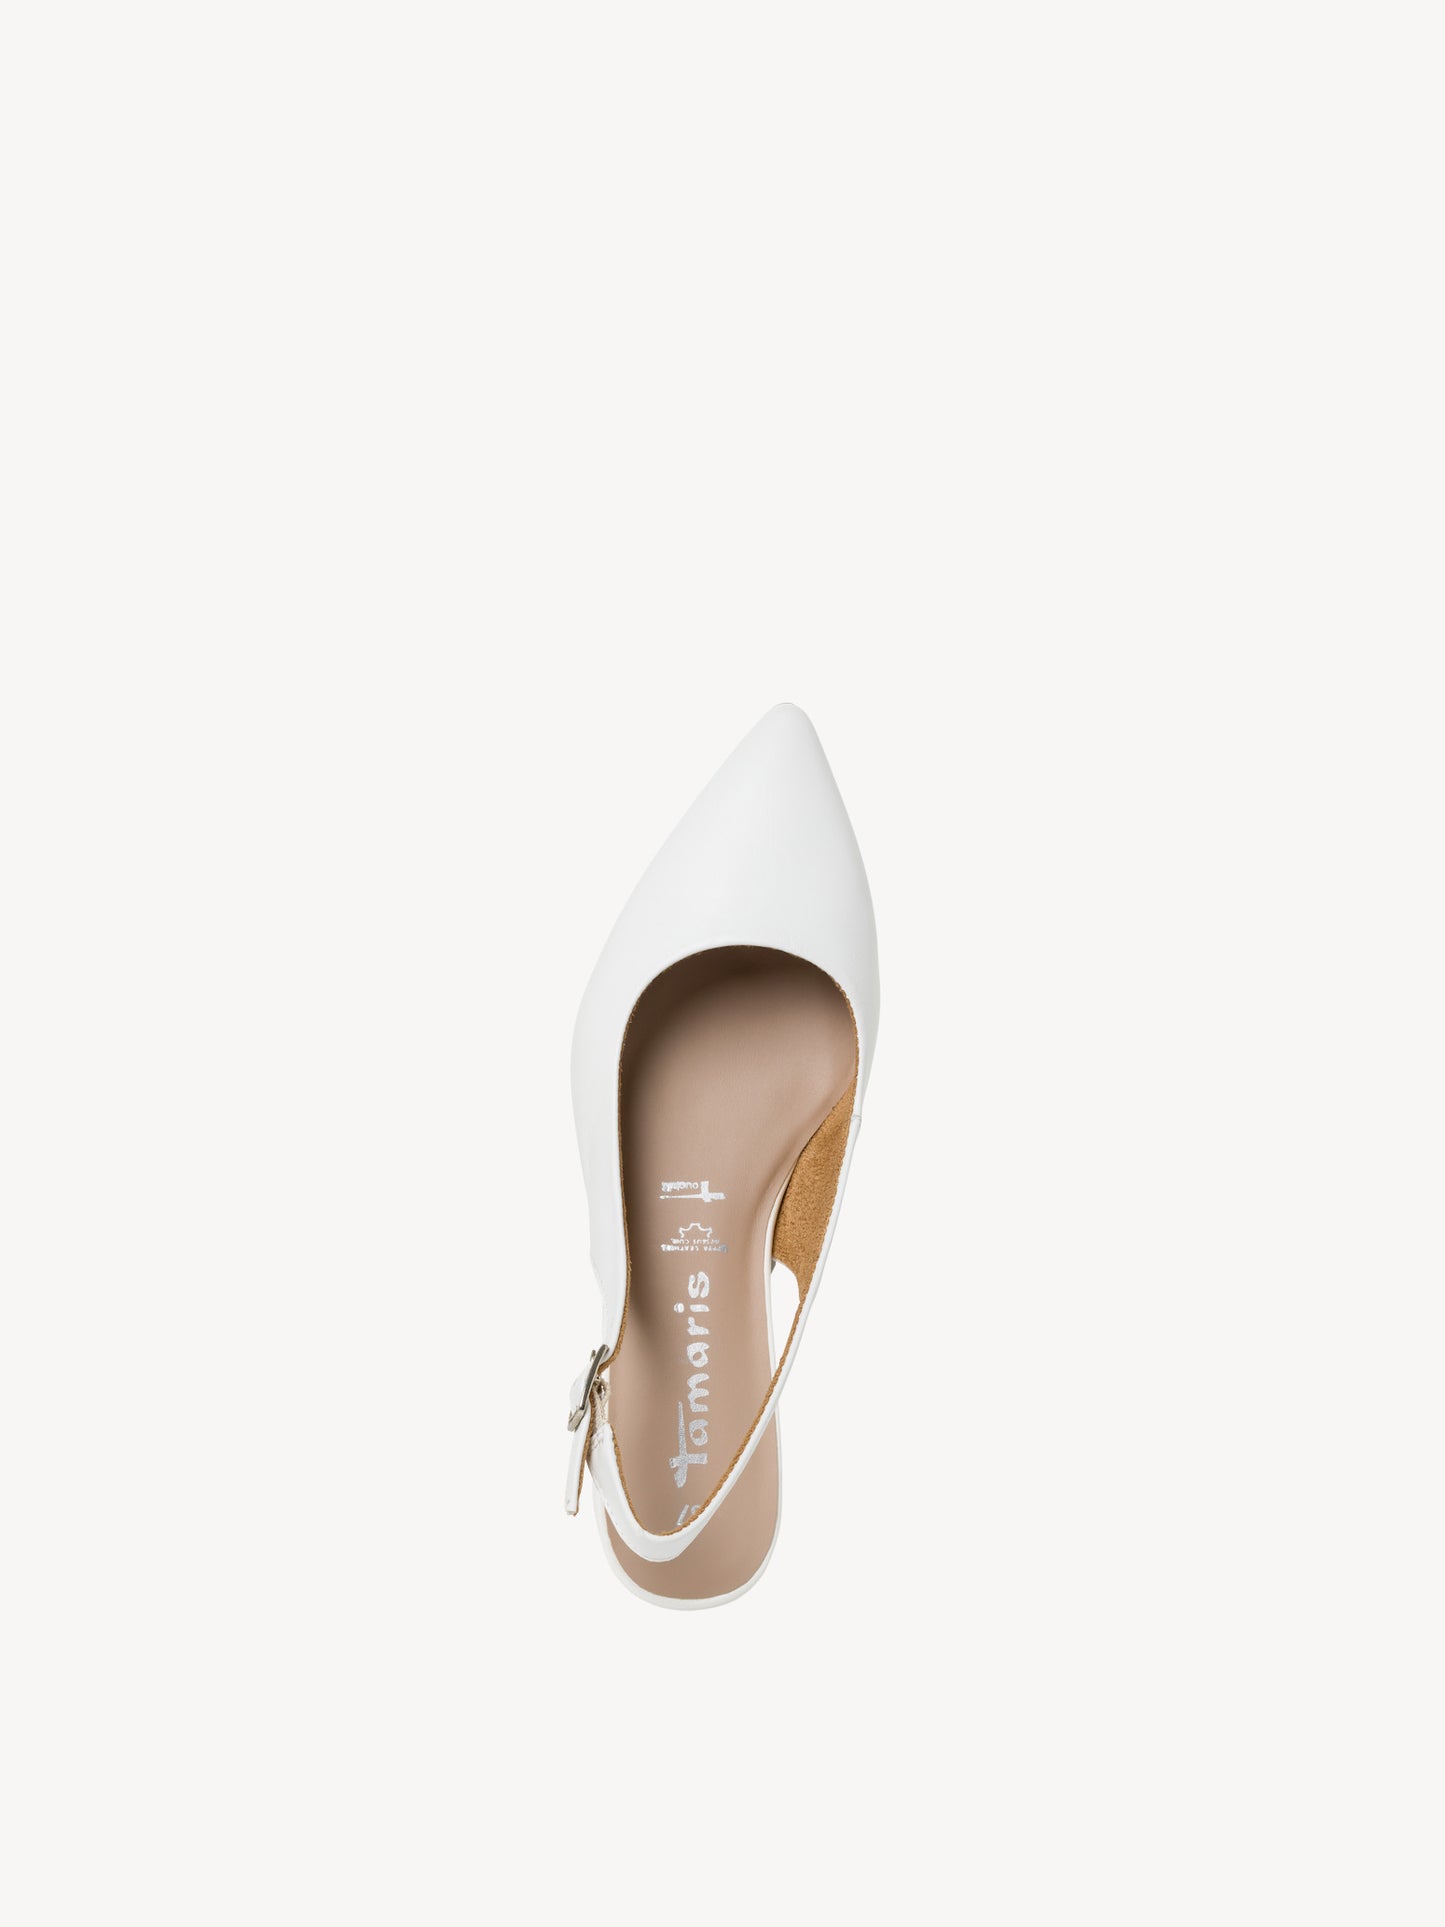 Tamaris Women's 1-29500-42 Leather Sling Pumps Shoes White